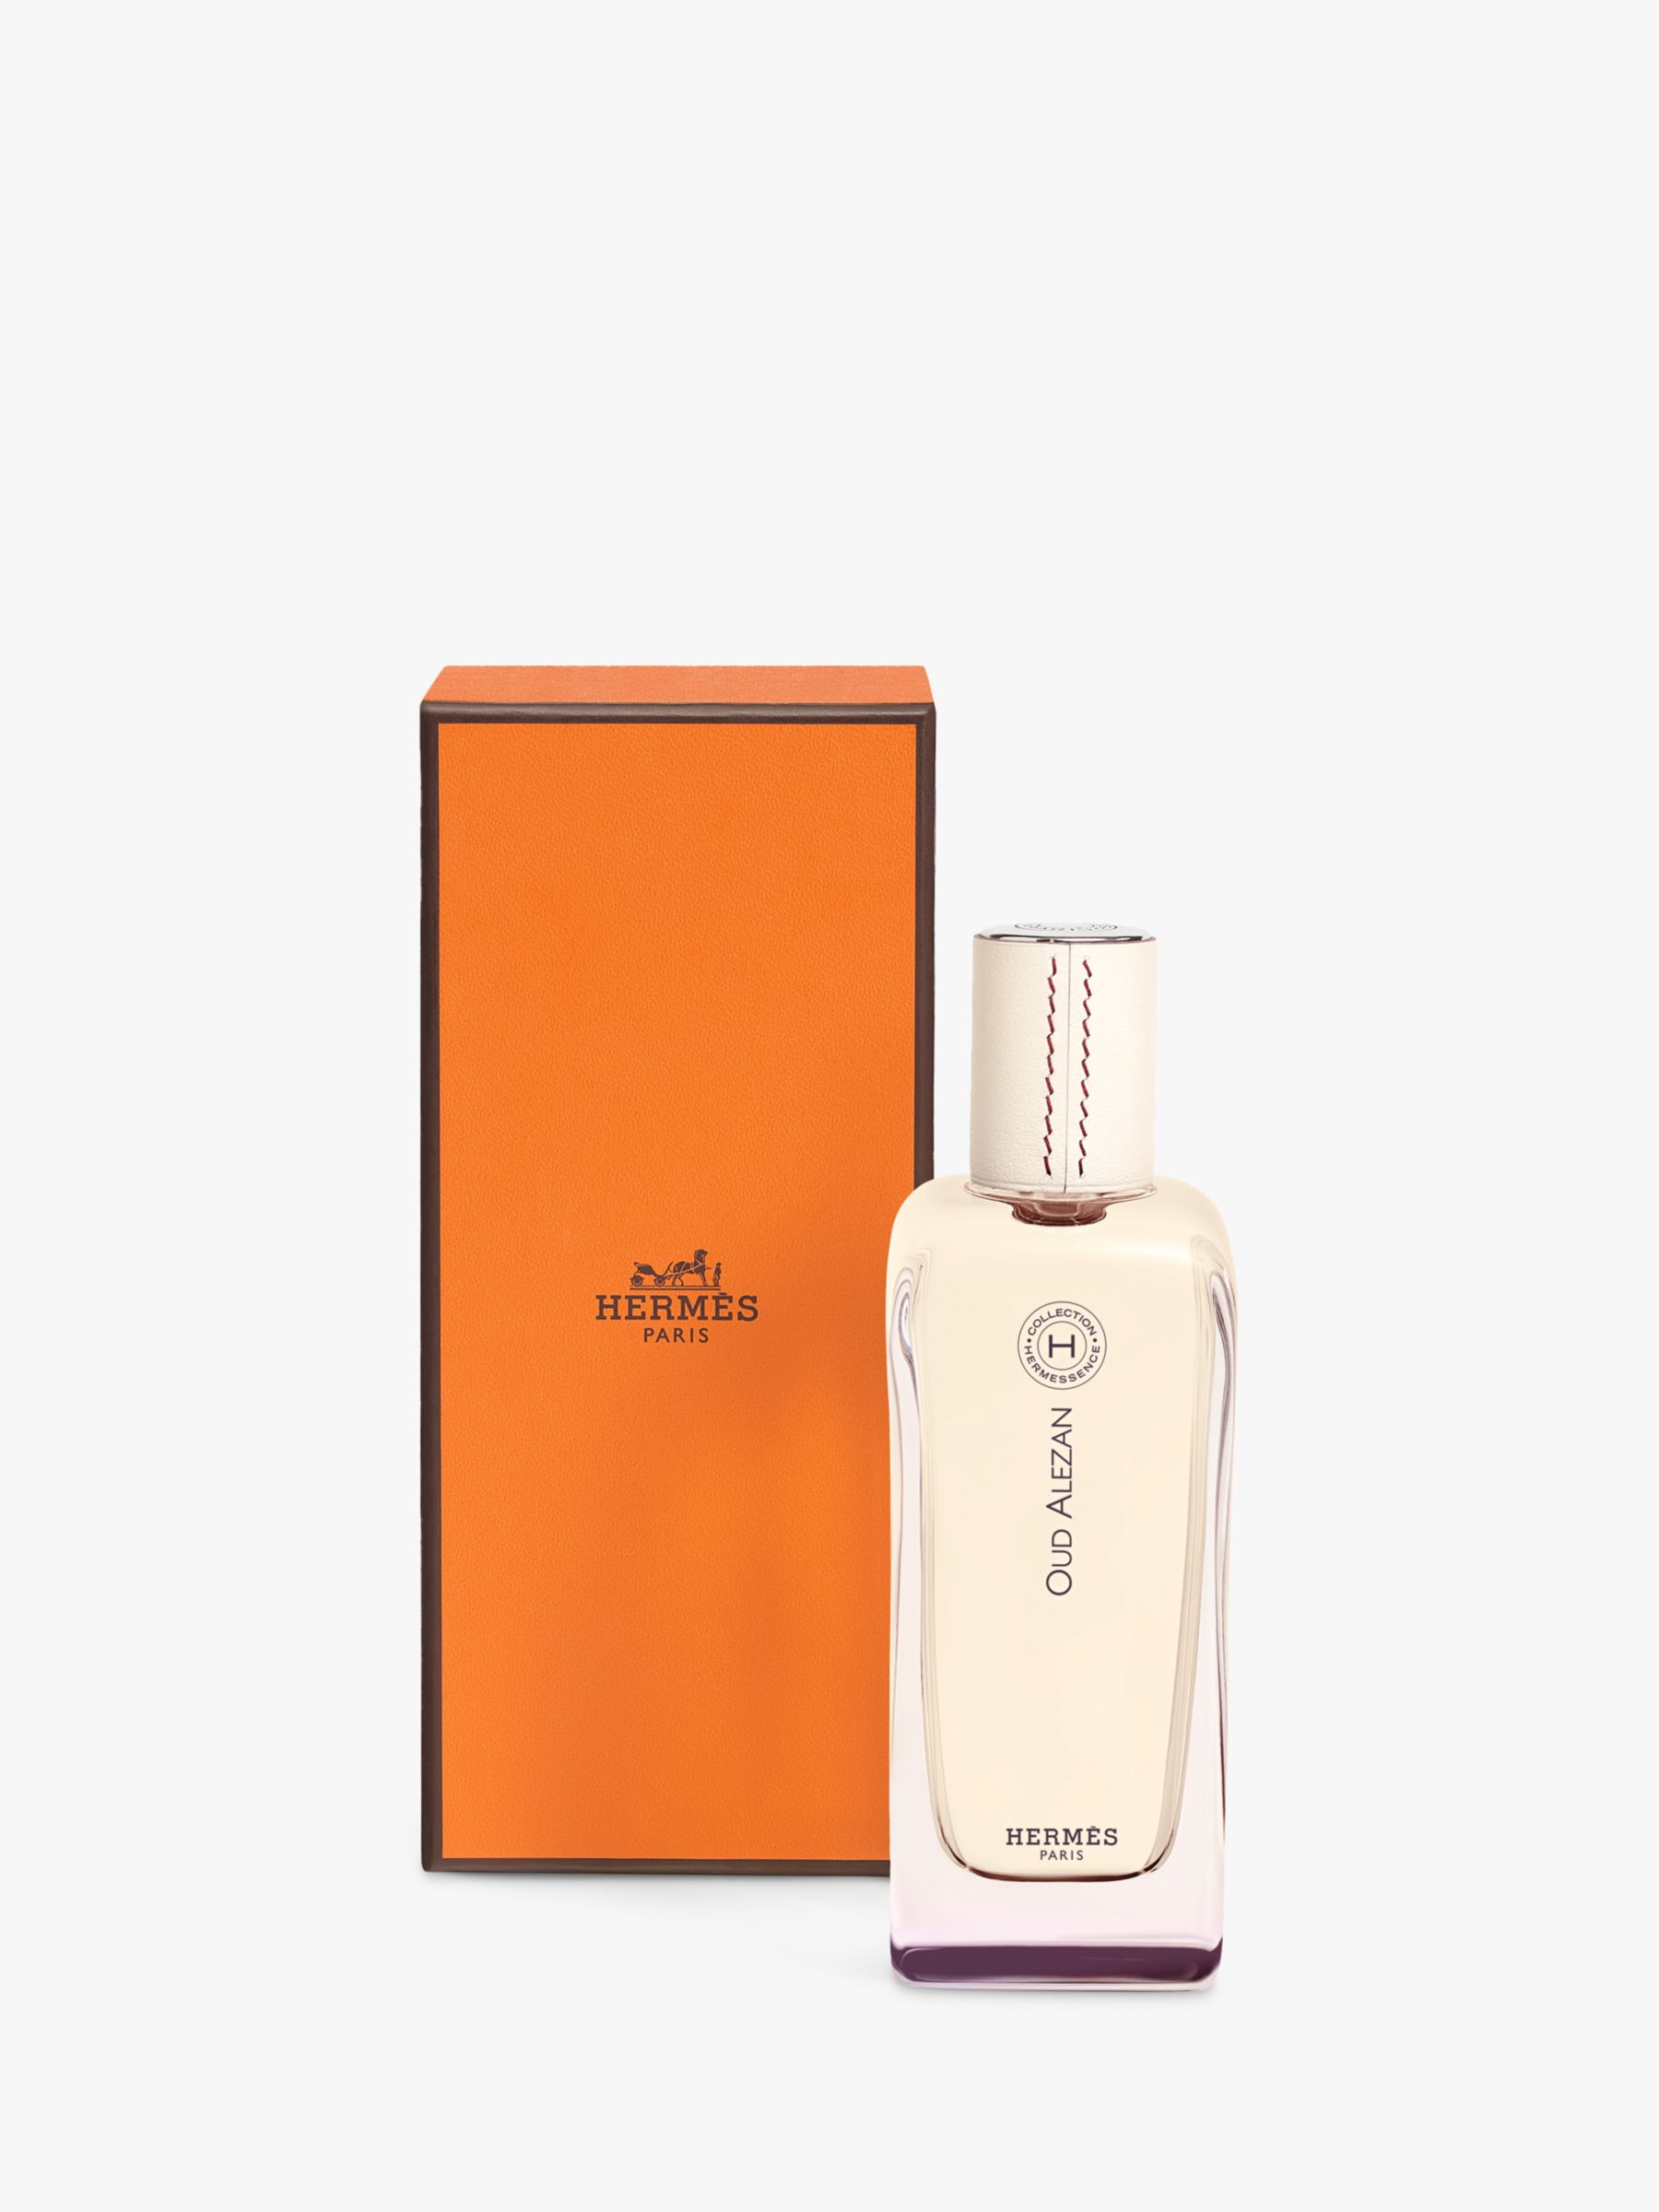 Hermès Hermessence Oud Alezan Eau de Parfum Refillable, 100ml 2